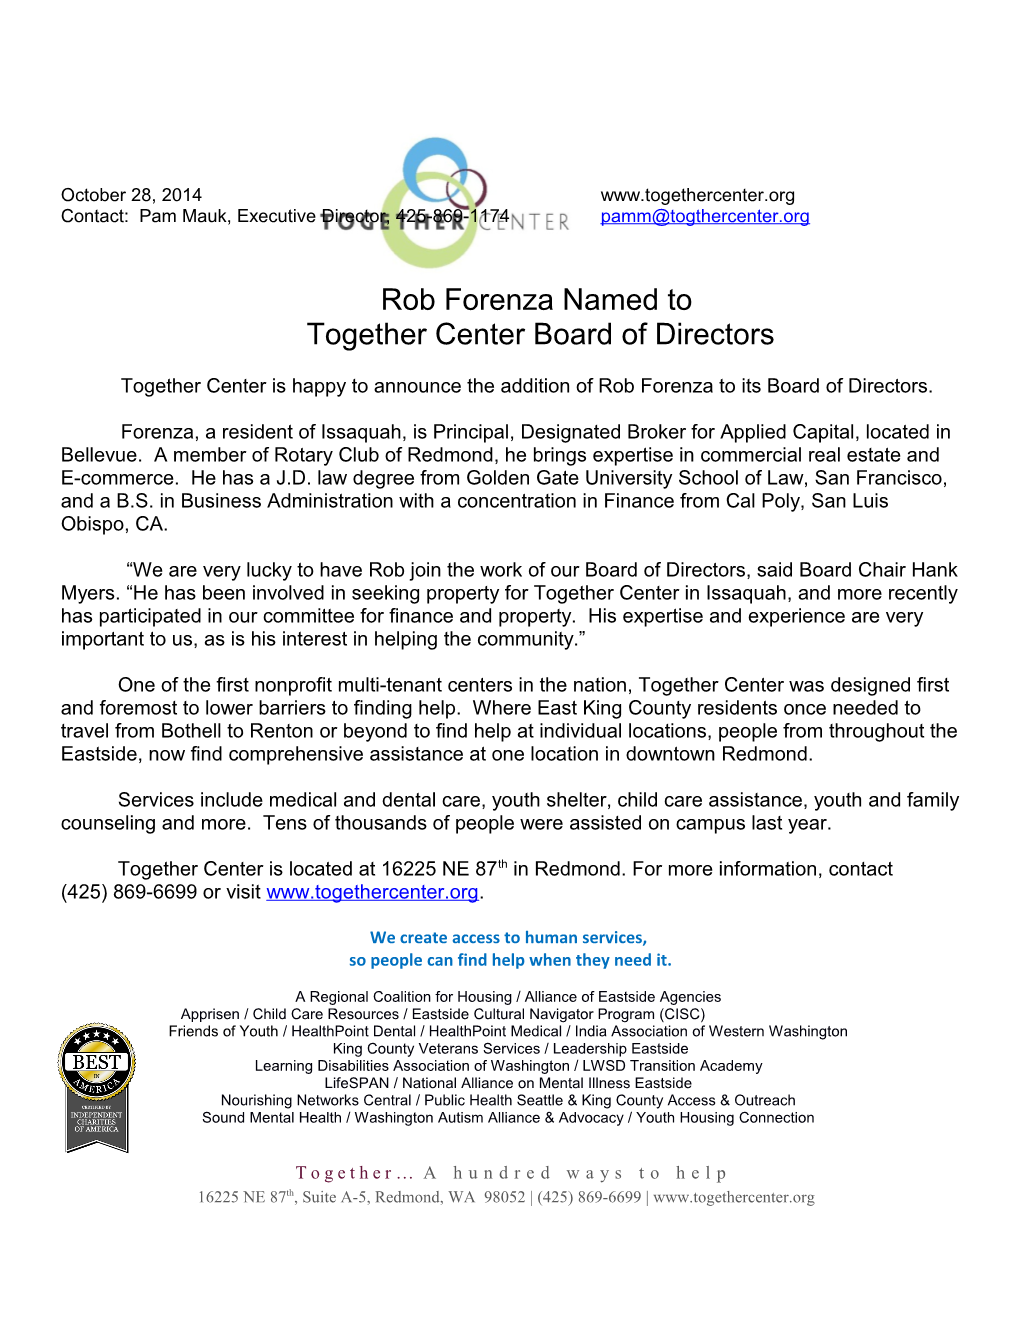 Together Center Board of Directors